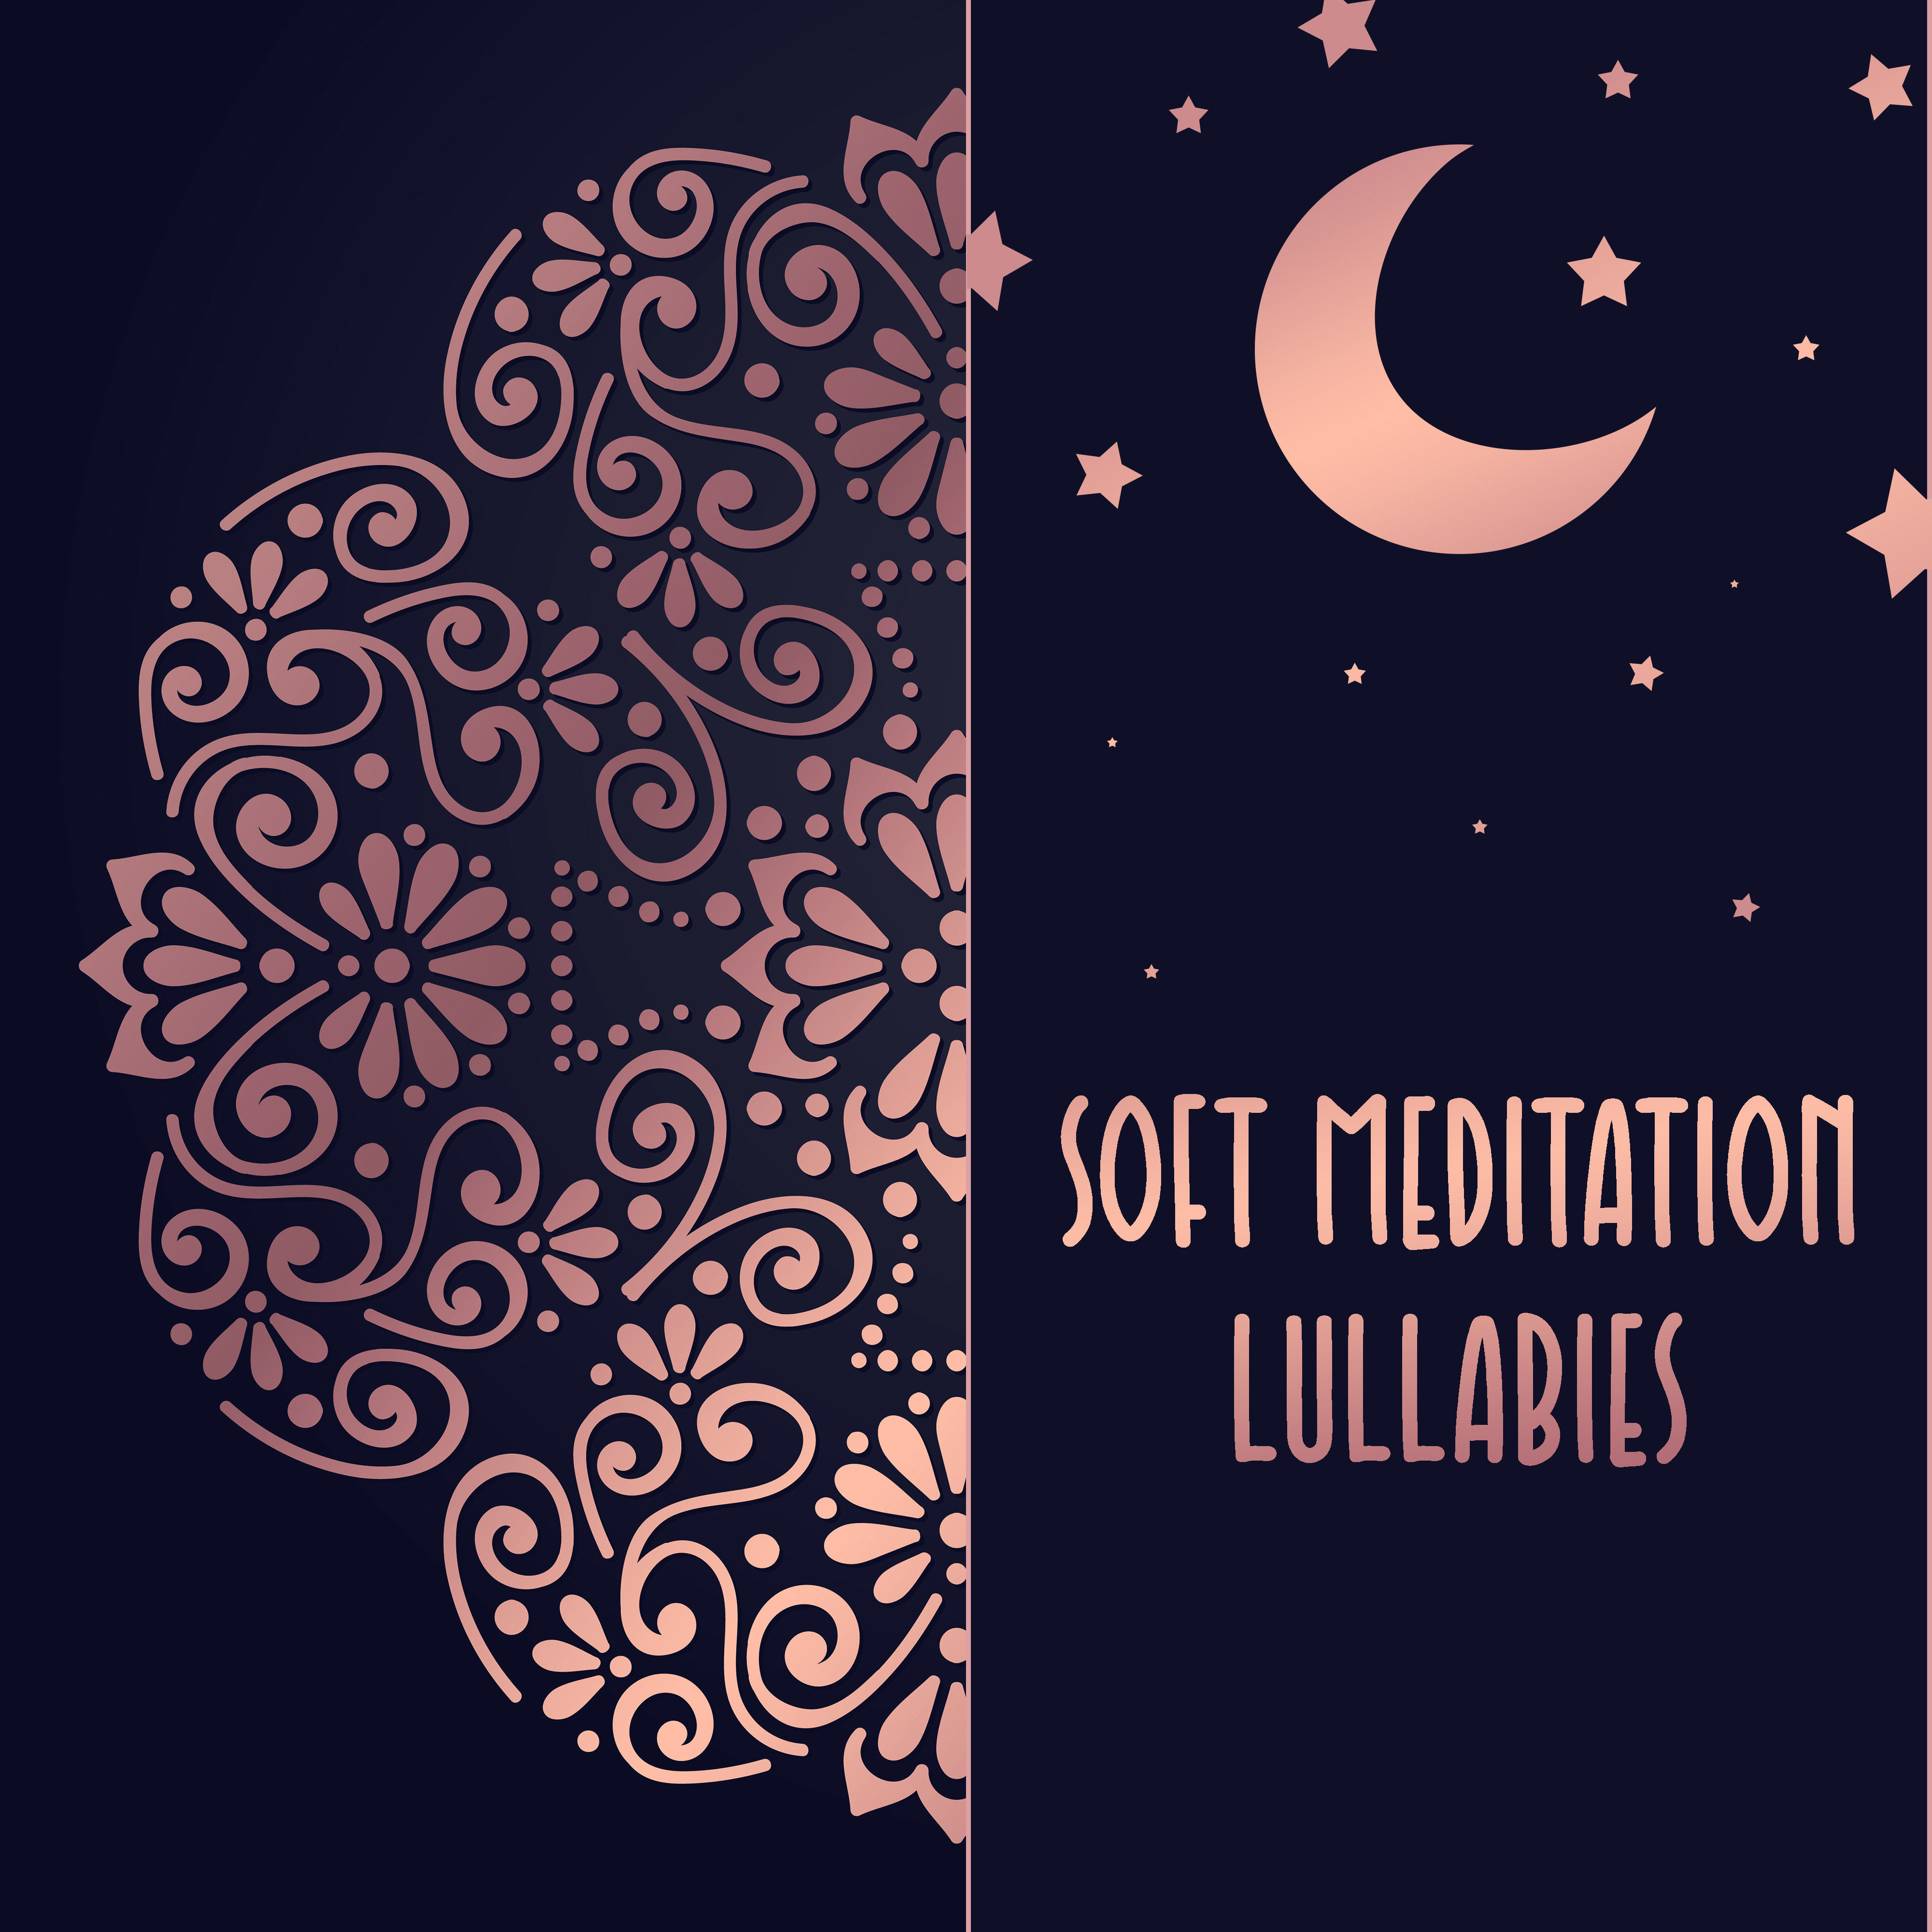 Soft Meditation Lullabies